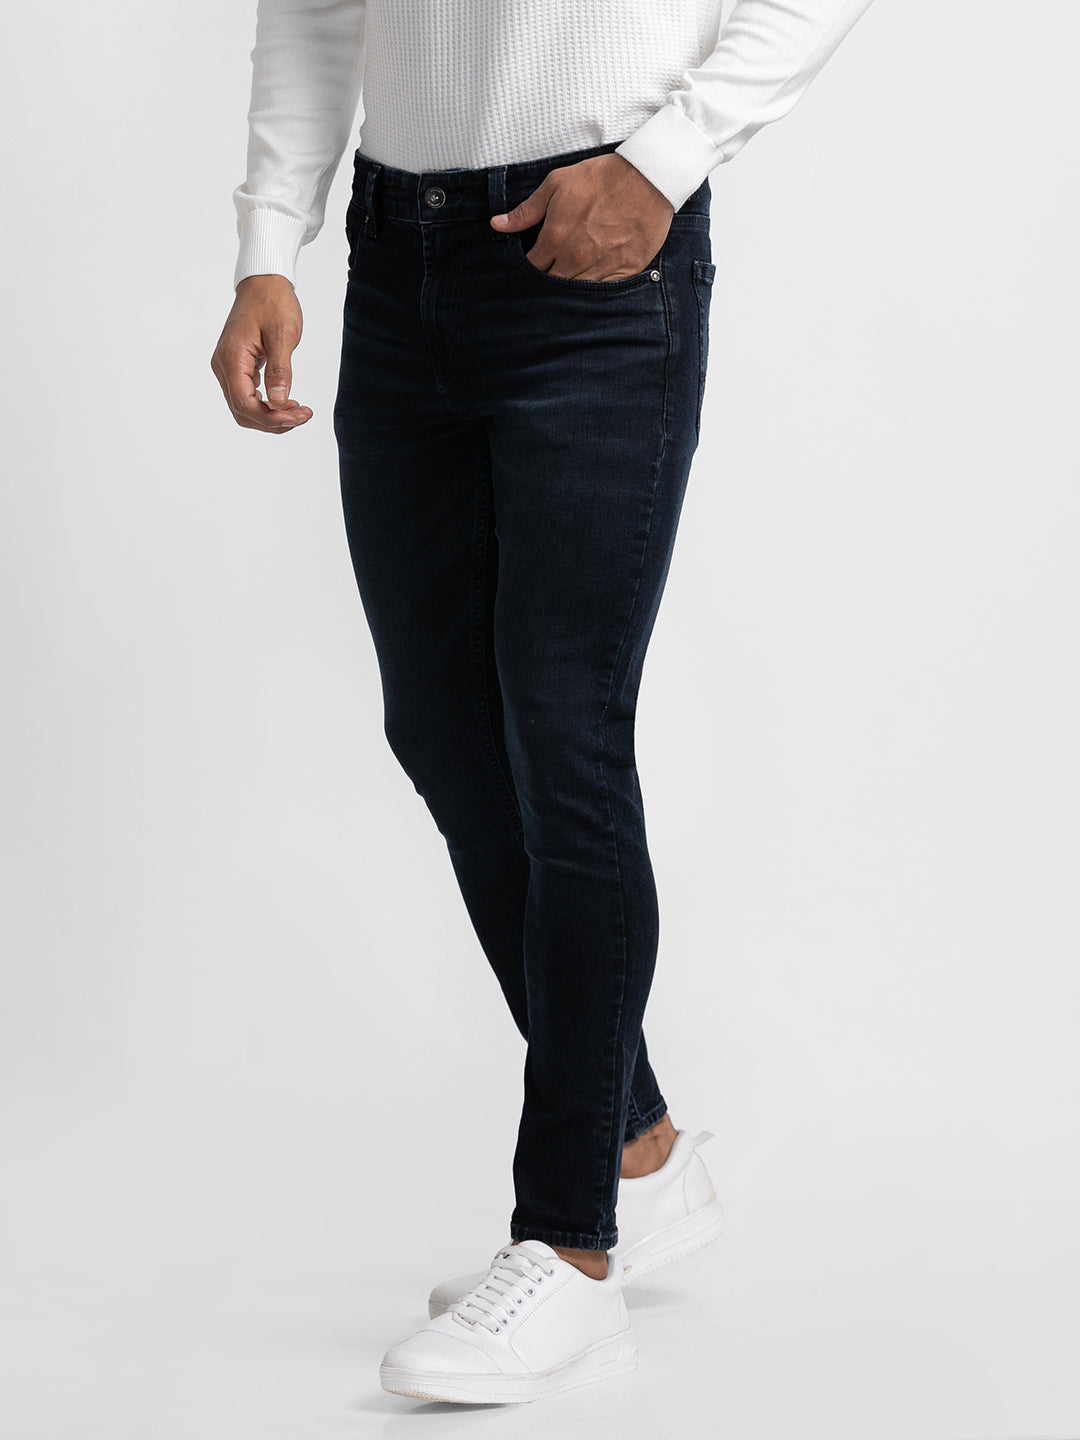 Spykar Blue Indigo Cotton Slim Fit Tapered Length Jeans For Men (Kano)